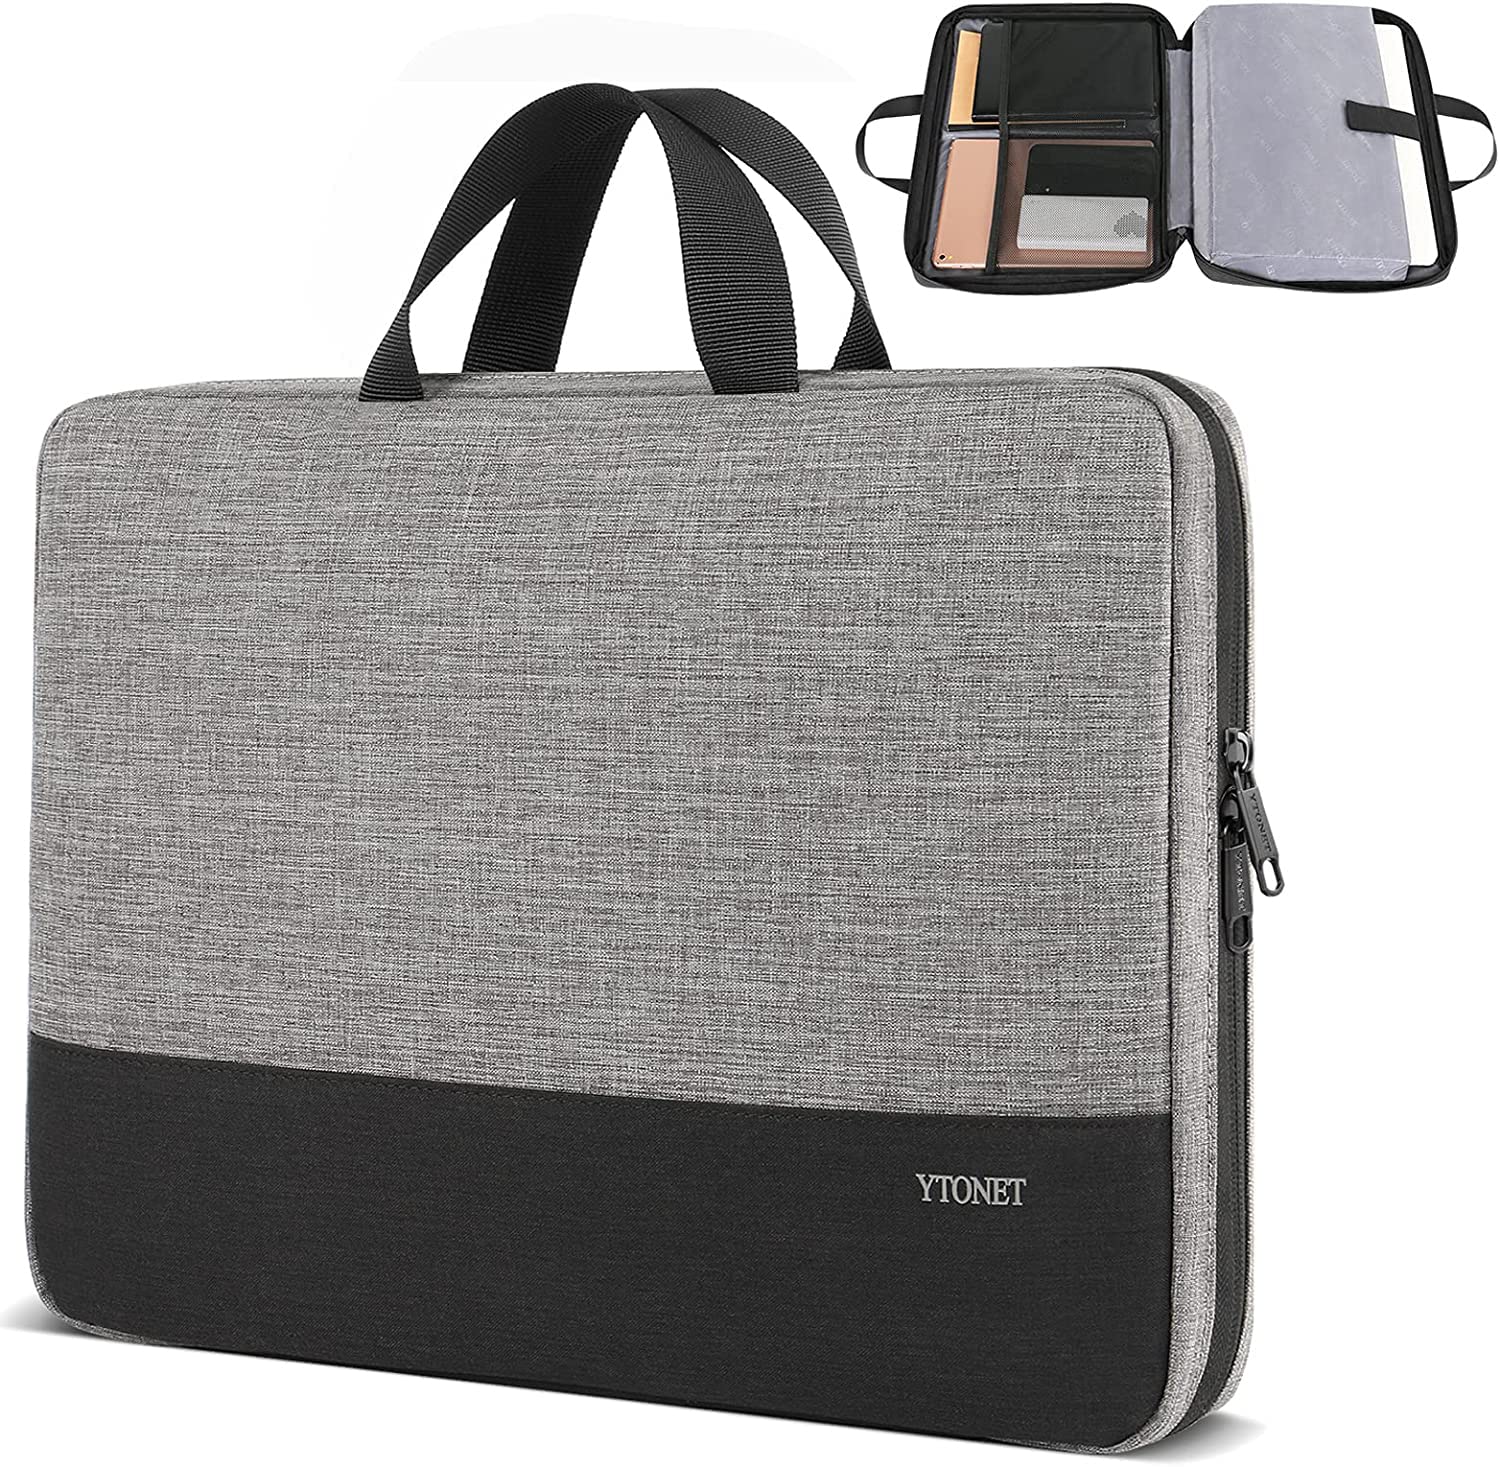 14-Inch Laptop Protective Case Bag For HP Pavilion x360 14-dh0525sa | eBay